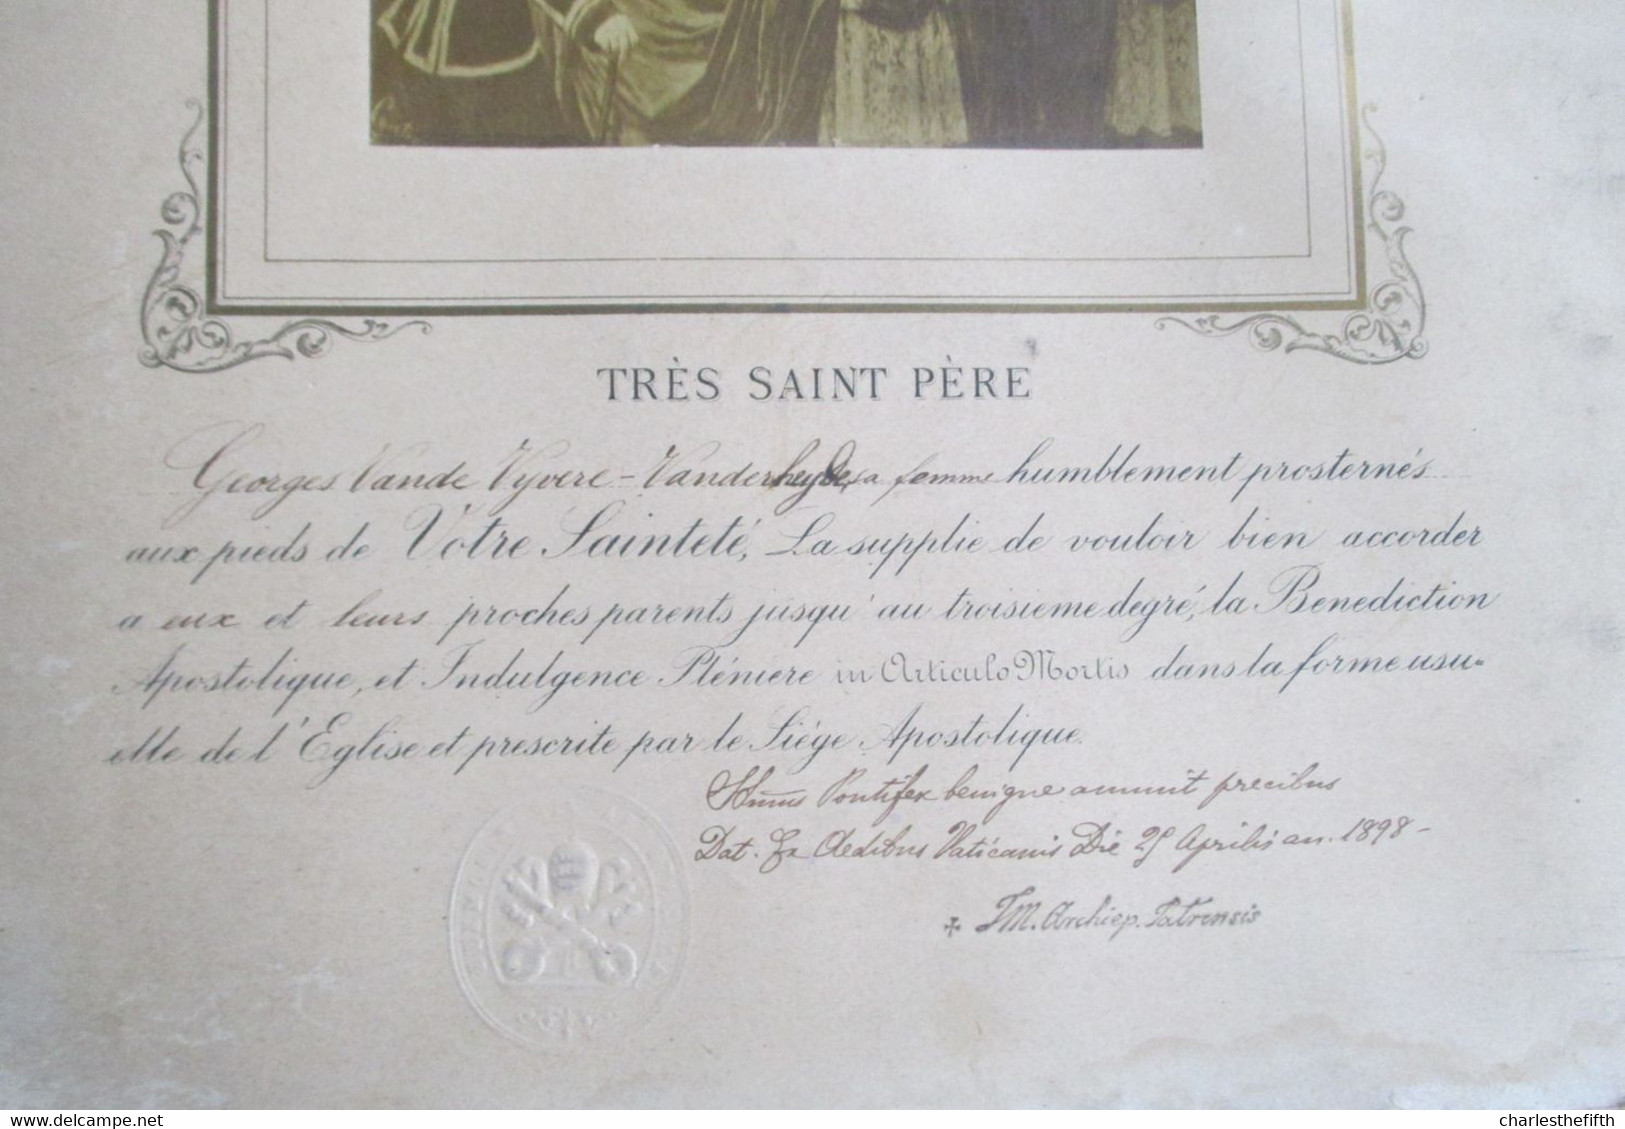 RARE BENEDICTION APOSTOLIQUE PAPE LEO XIII Année 1885 - PHOTO ALBUMINE SIGNEE - TAMPON SEC DU PAPE - à VANDE VYVERE - Ancianas (antes De 1900)